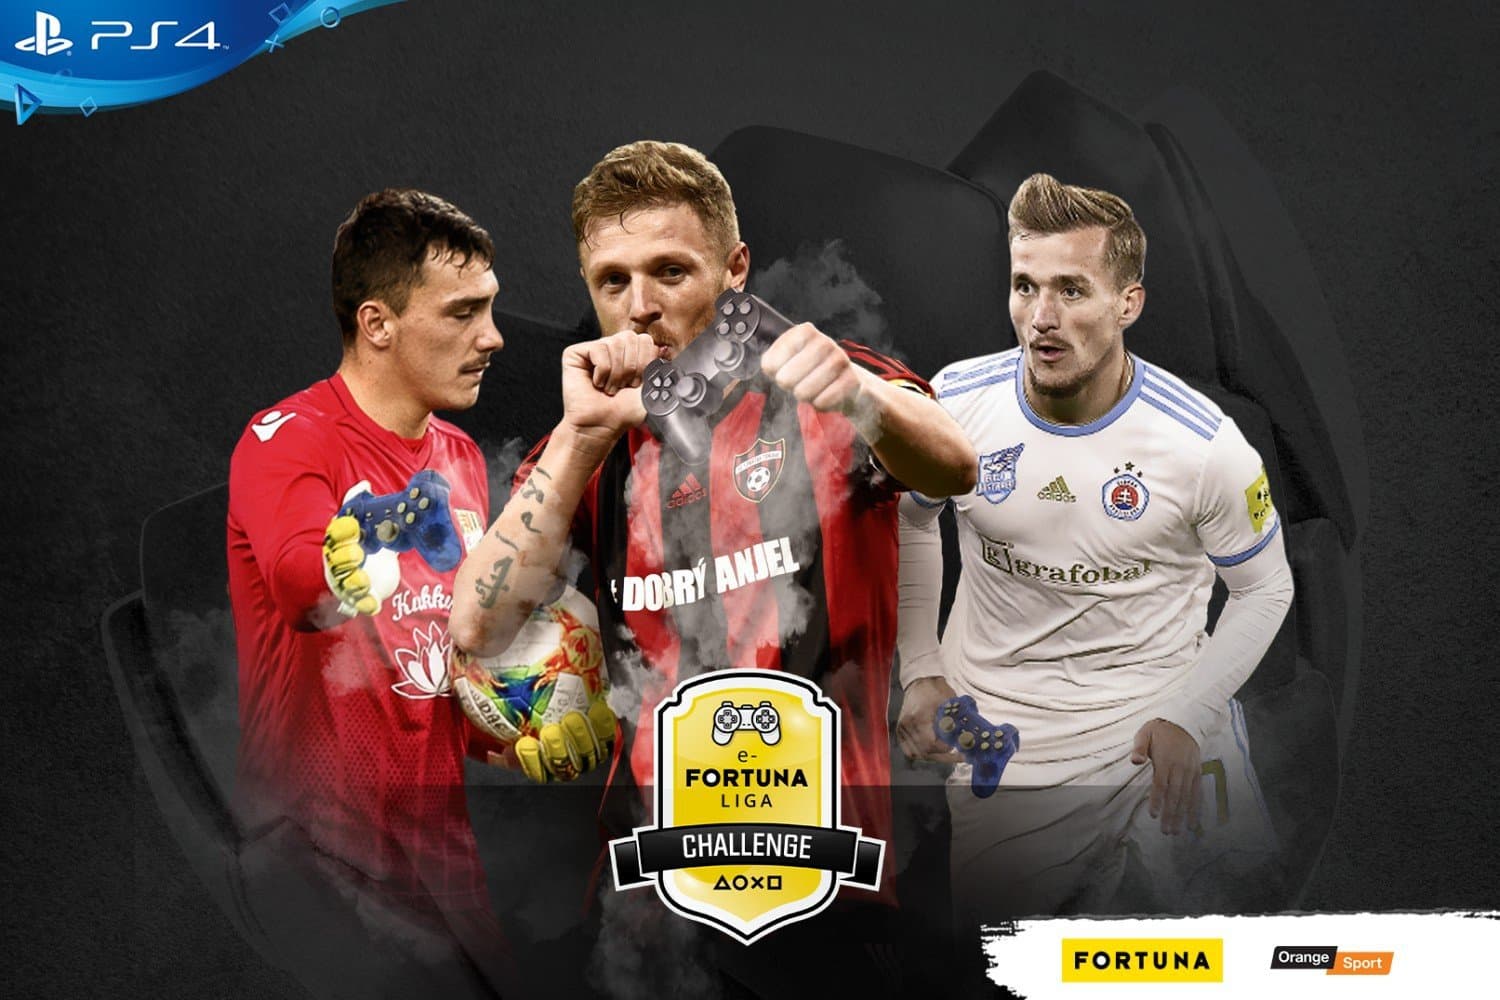 A hétvégén e-Fortuna Liga Challenge lesz Martin Jedličkával